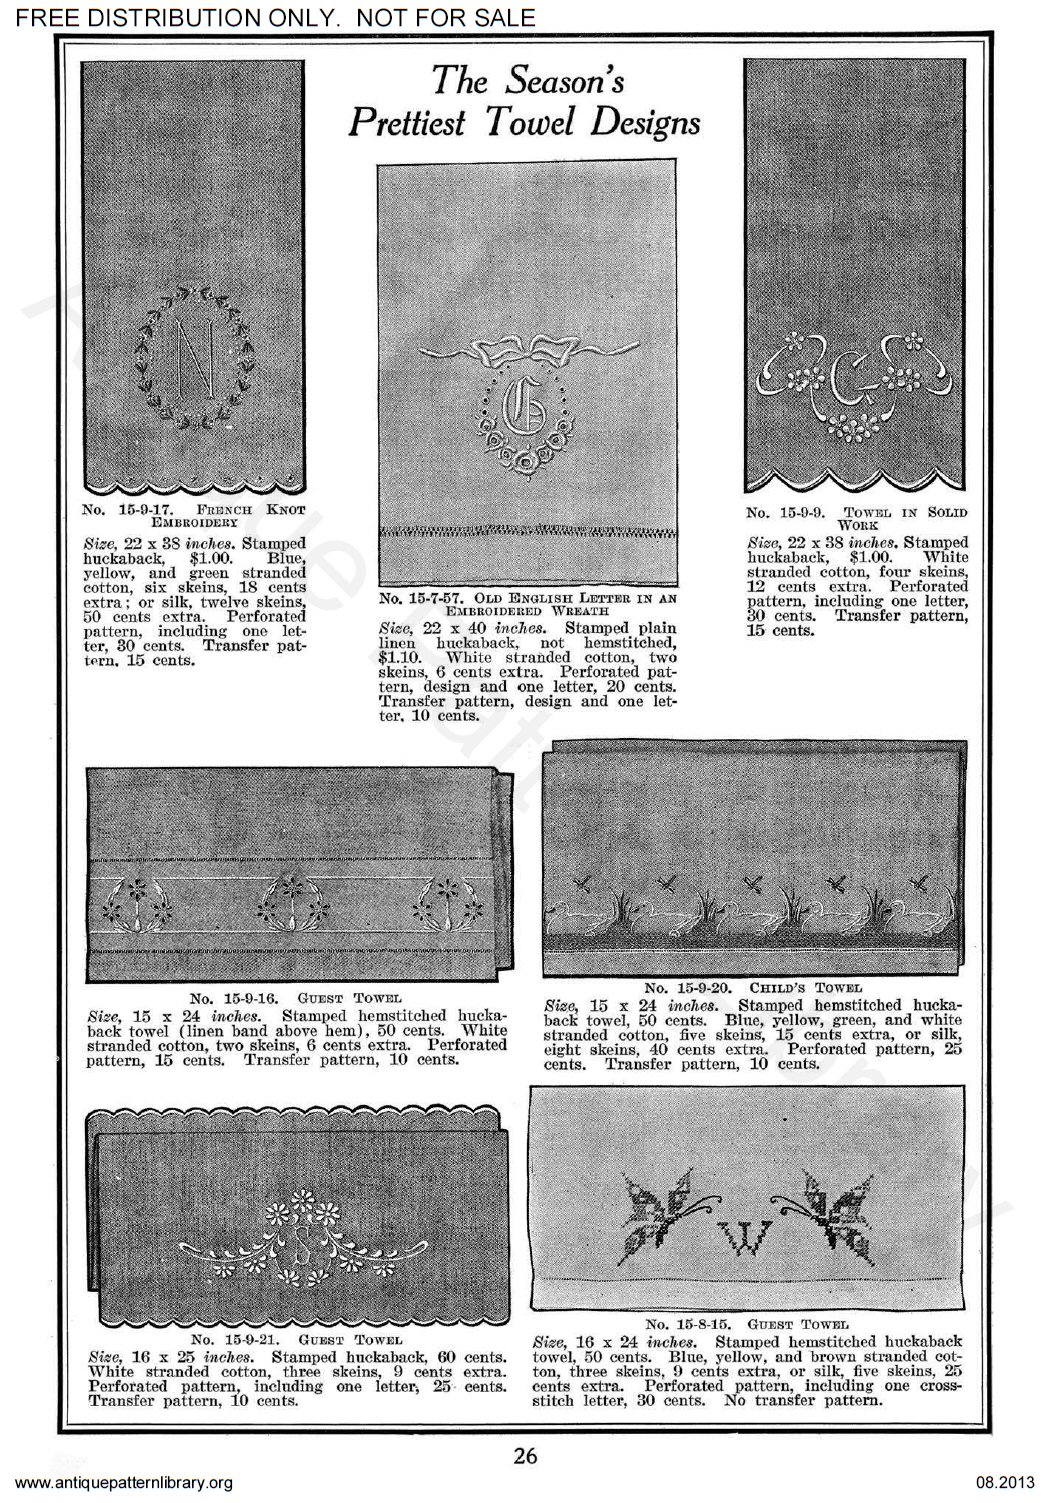 6-LP001 Priscilla Embroidery Patterns,